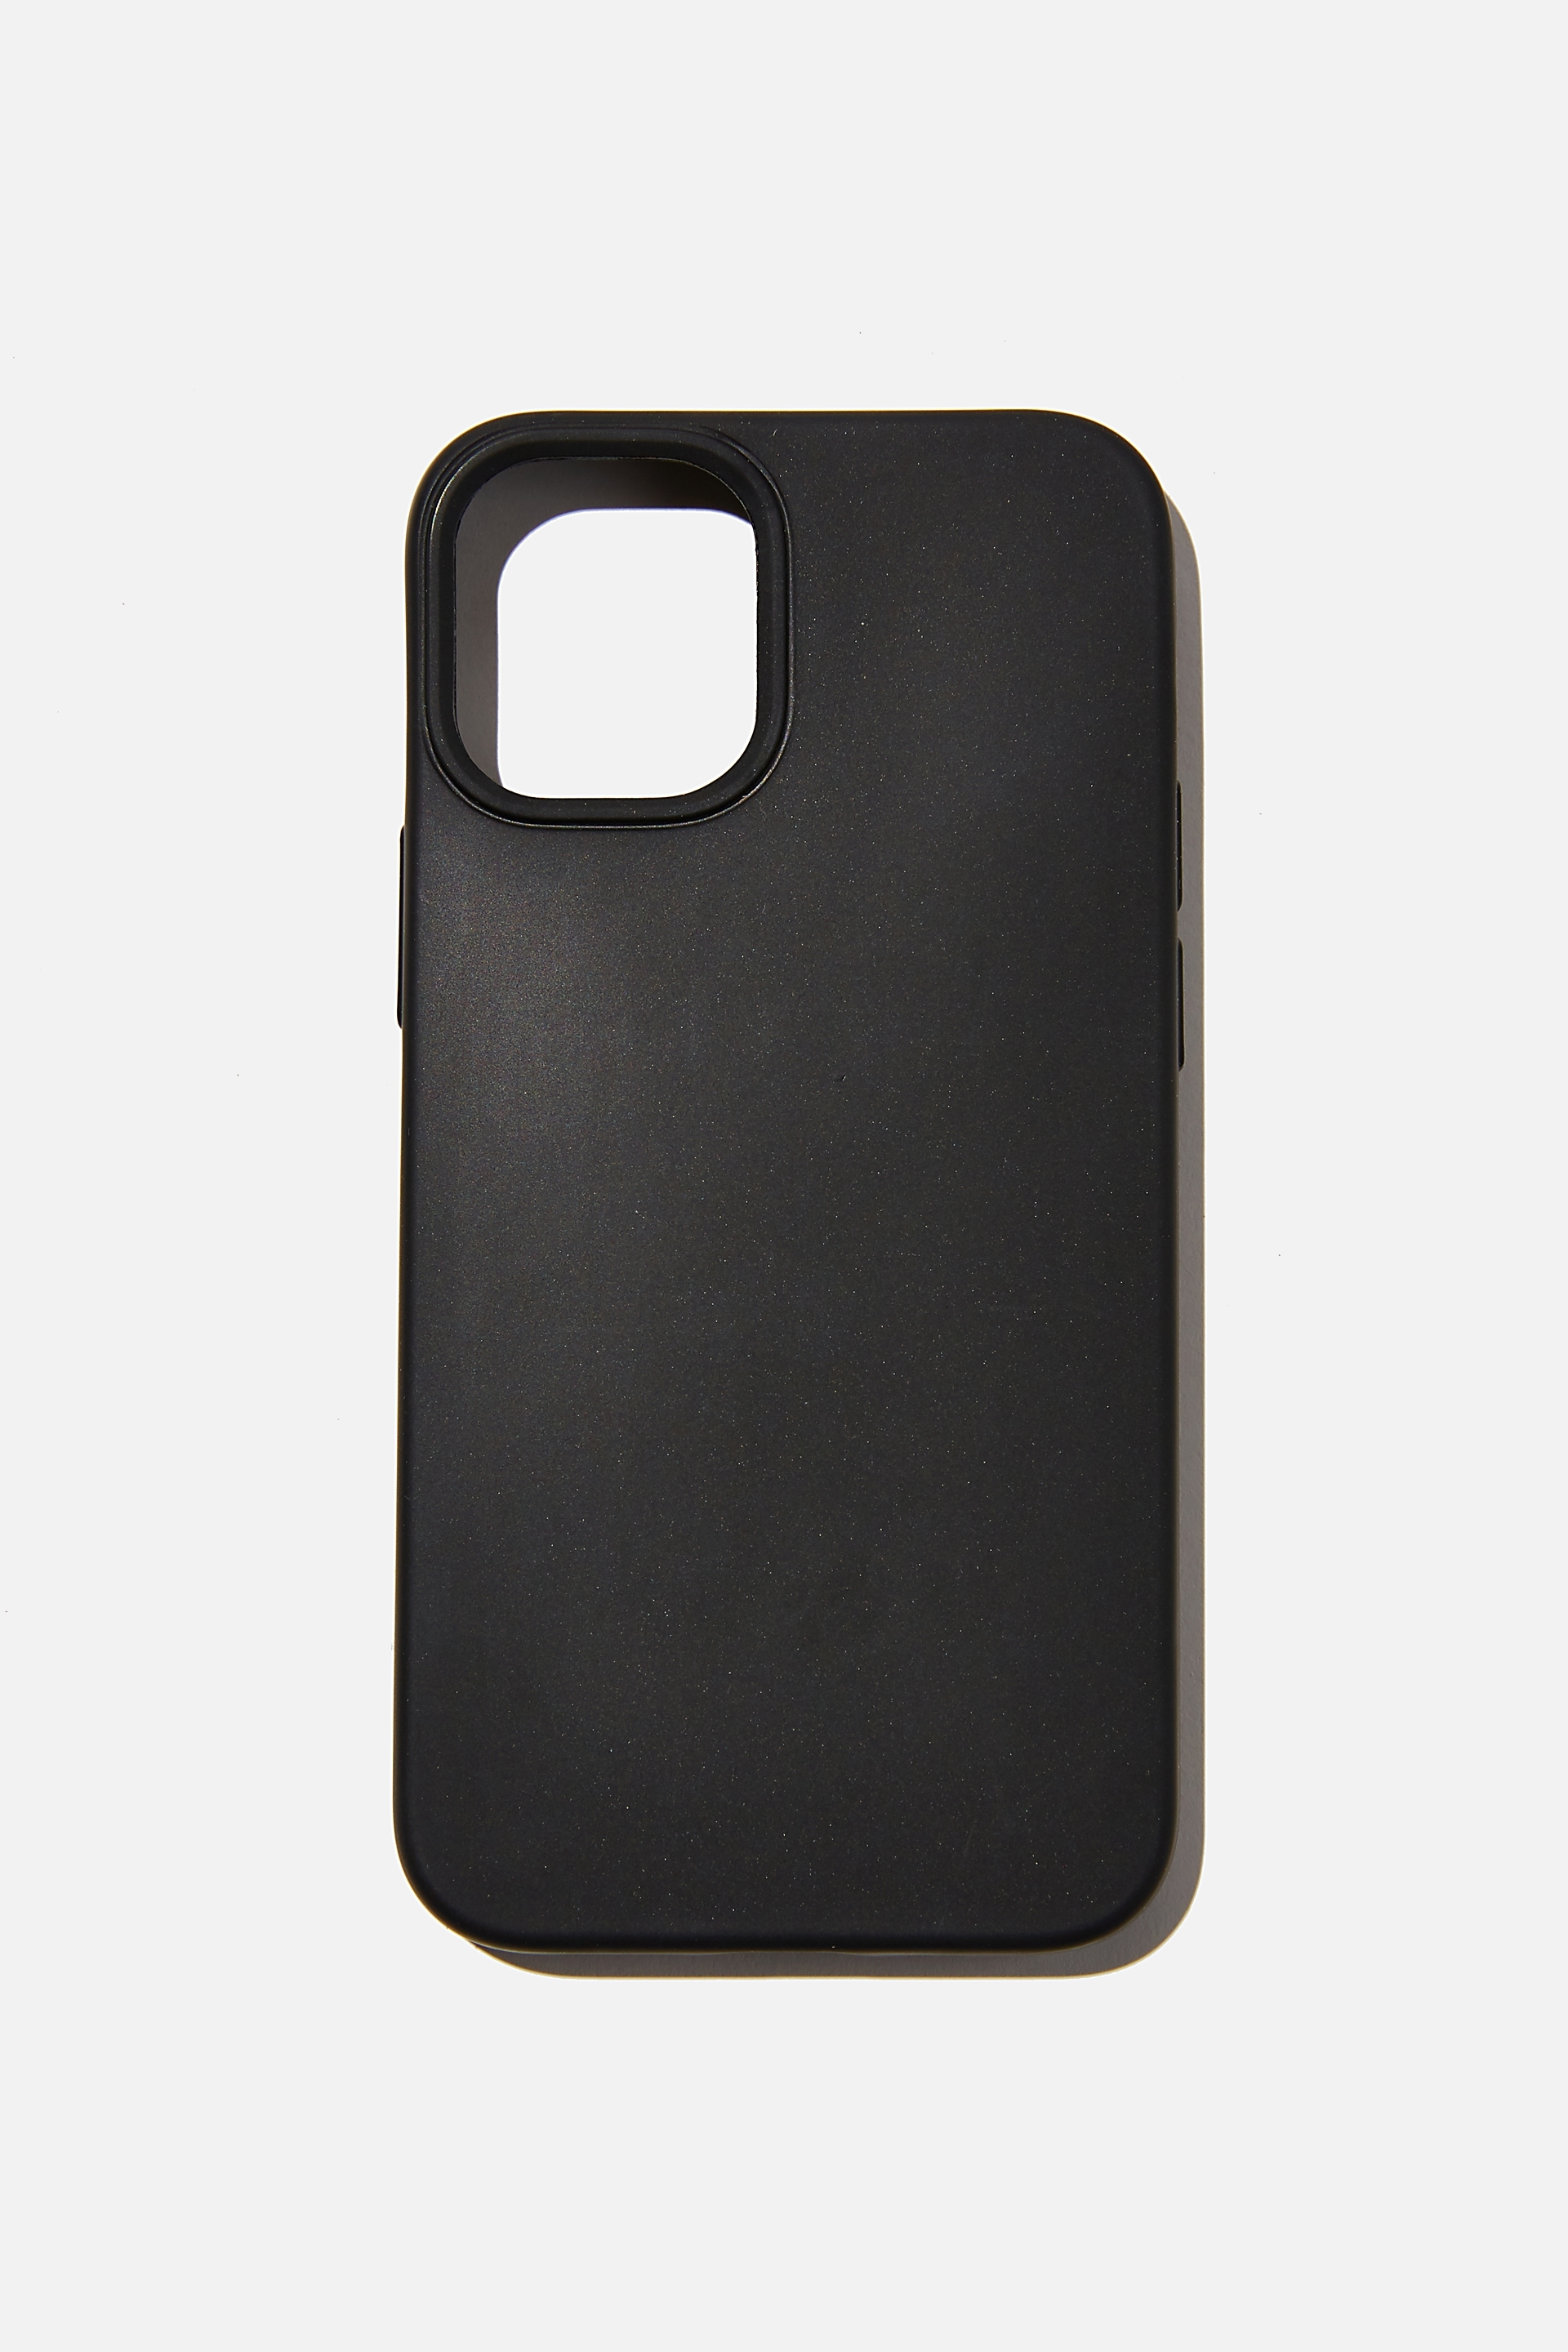 Typo - Recycled Phone Case Iphone 12 Mini - Black